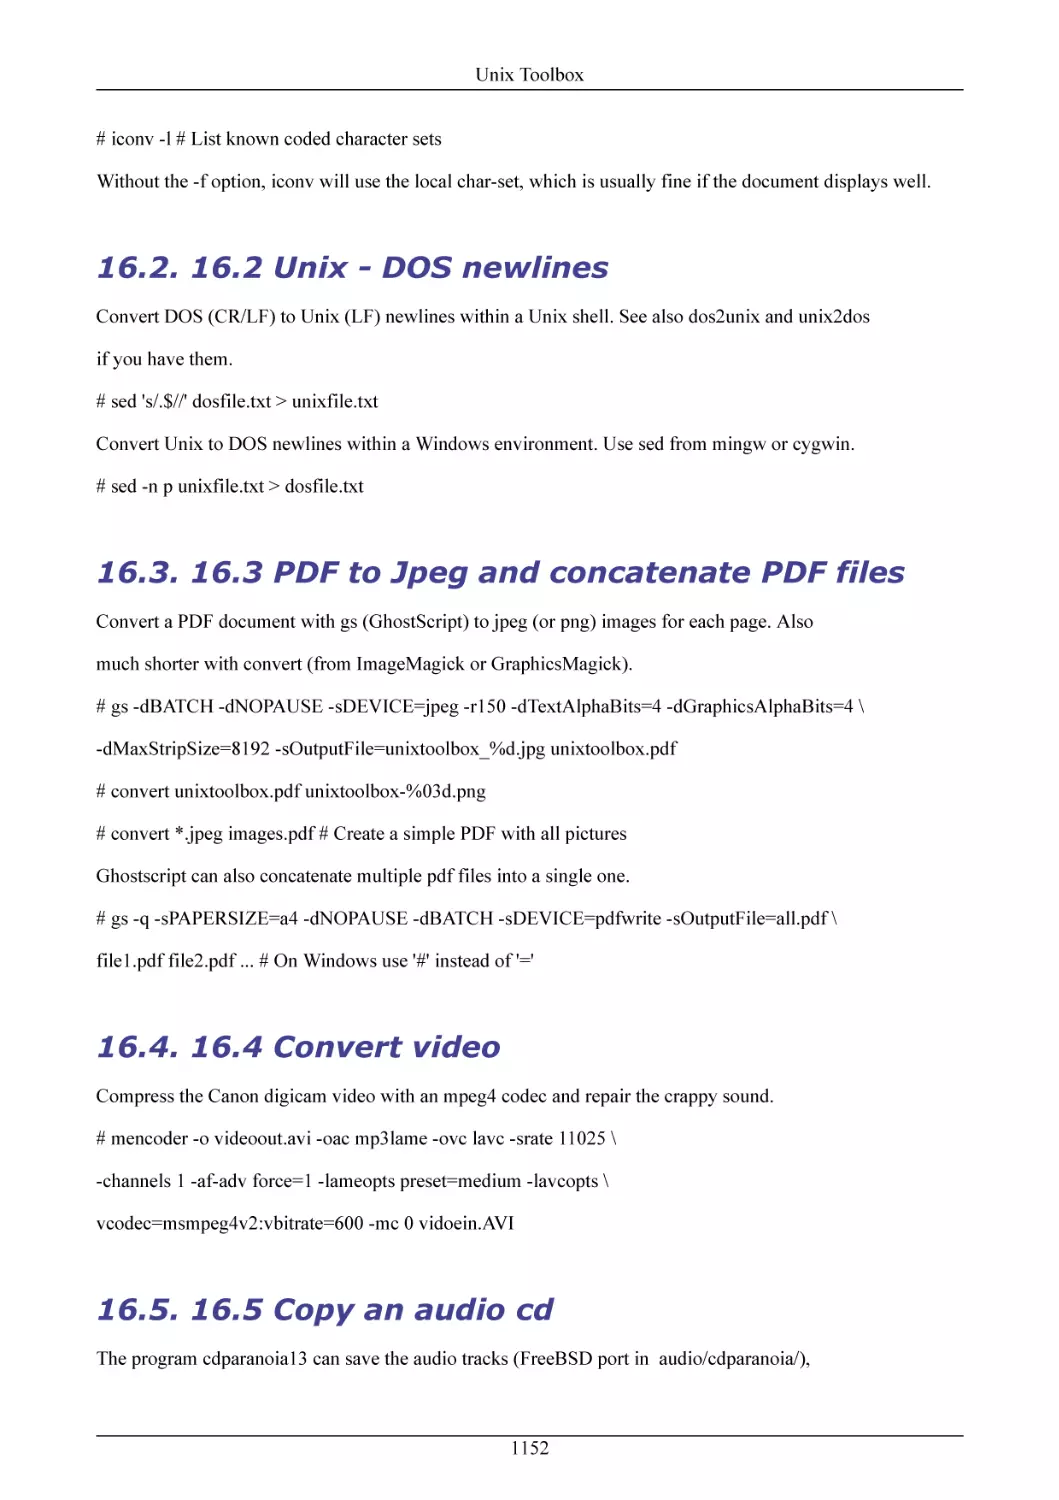 16.2 Unix - DOS newlines
16.3 PDF to Jpeg and concatenate PDF files
16.4 Convert video
16.5 Copy an audio cd